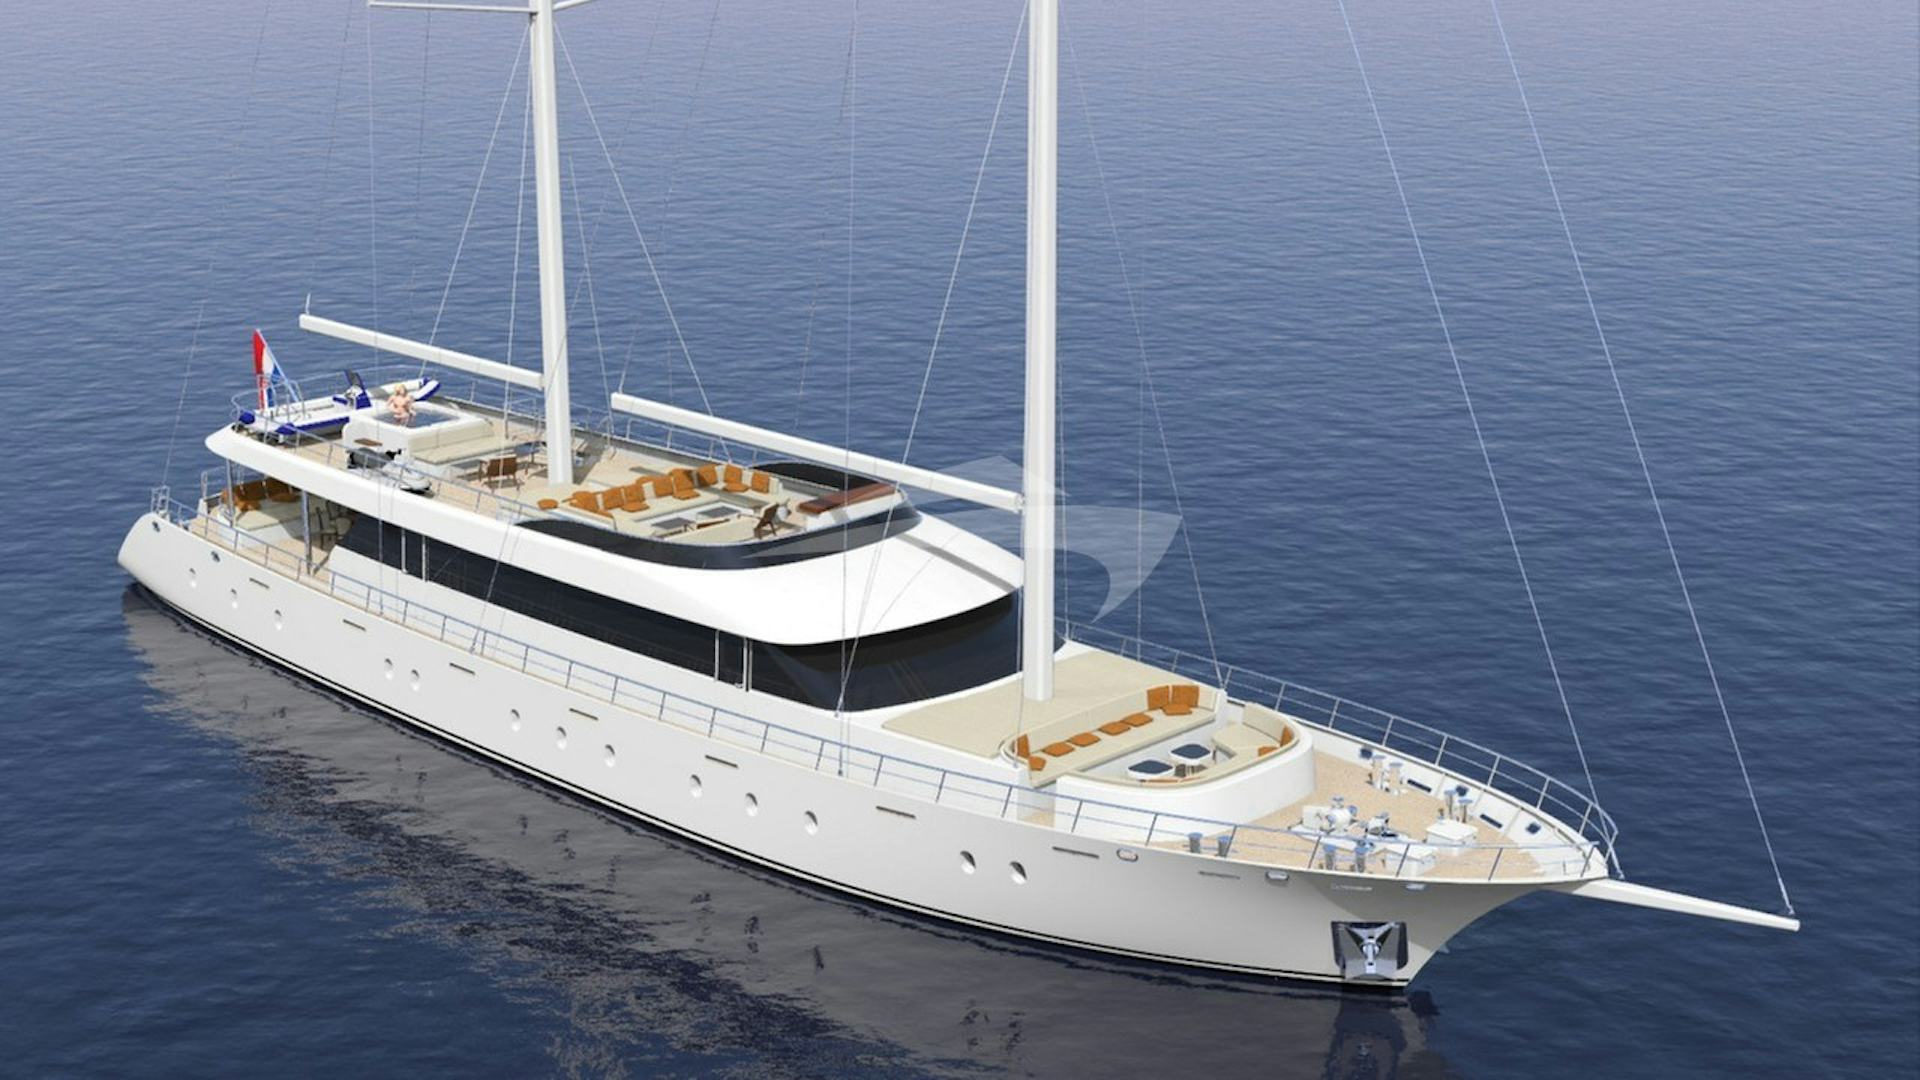 aurum sky yacht charter